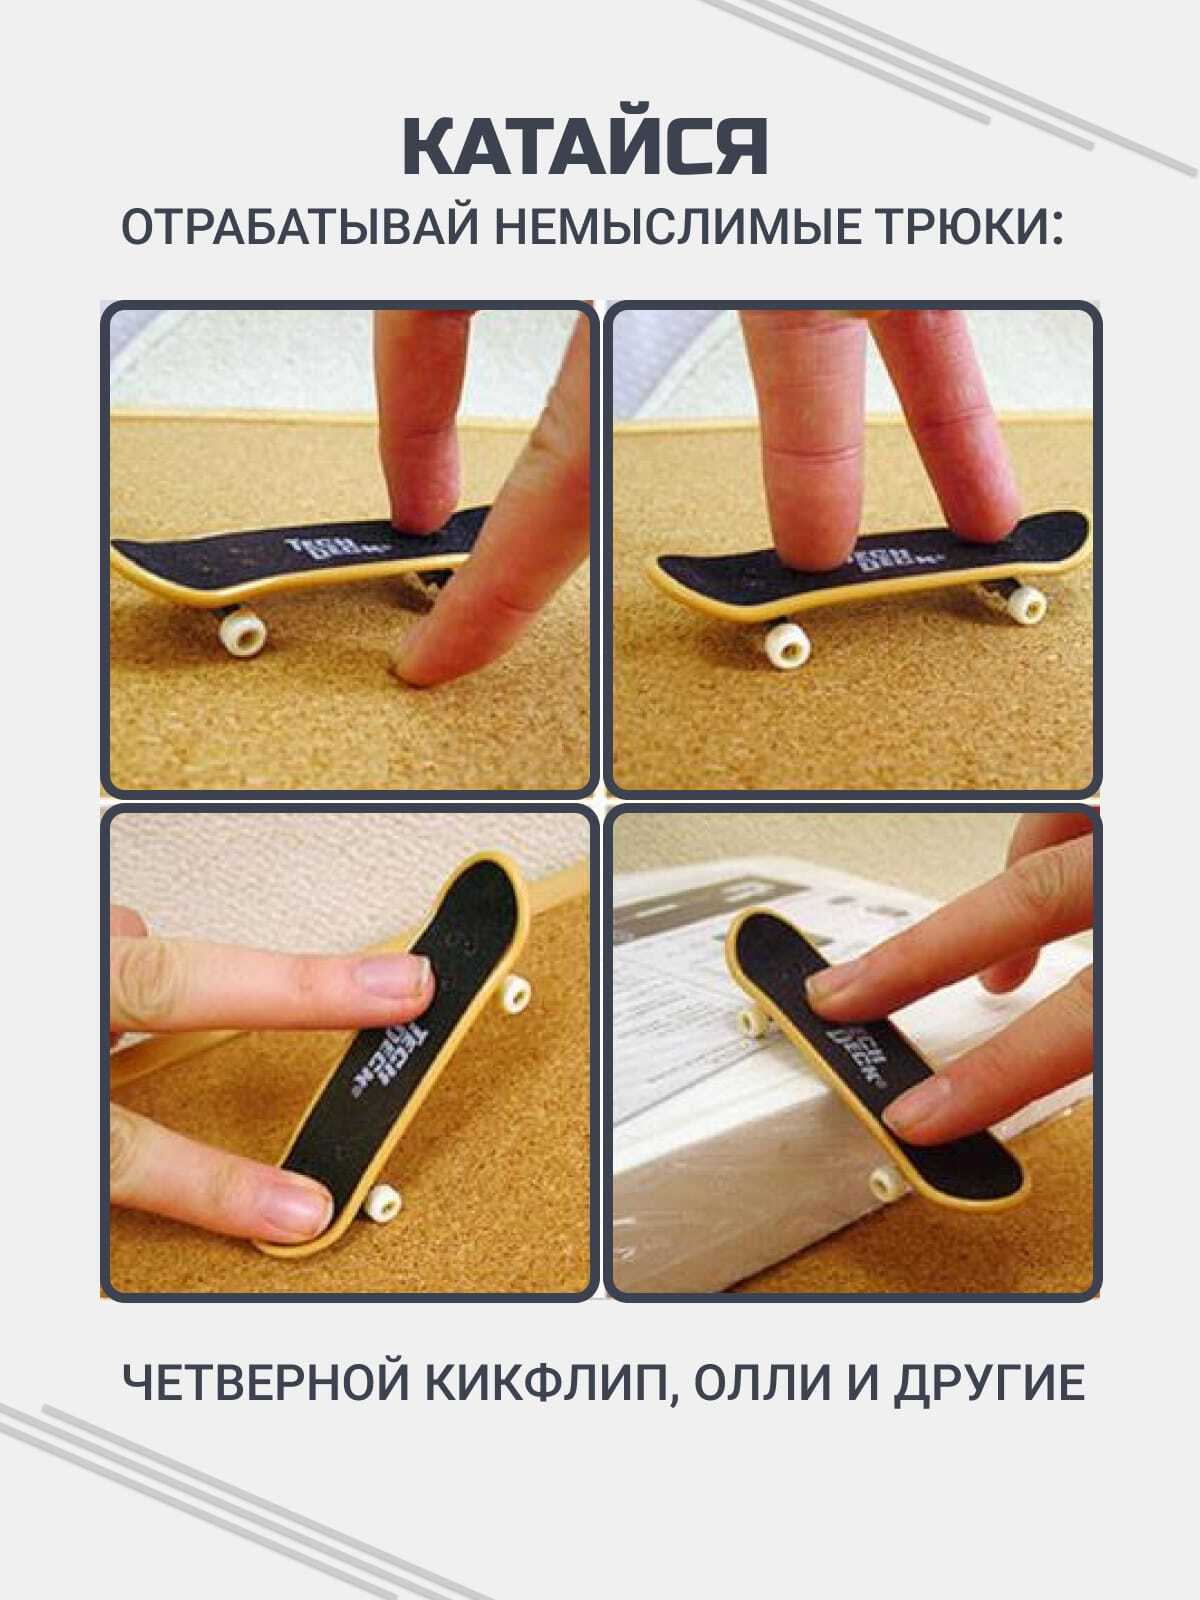 игрушка мини скейт для пальцев фото 8